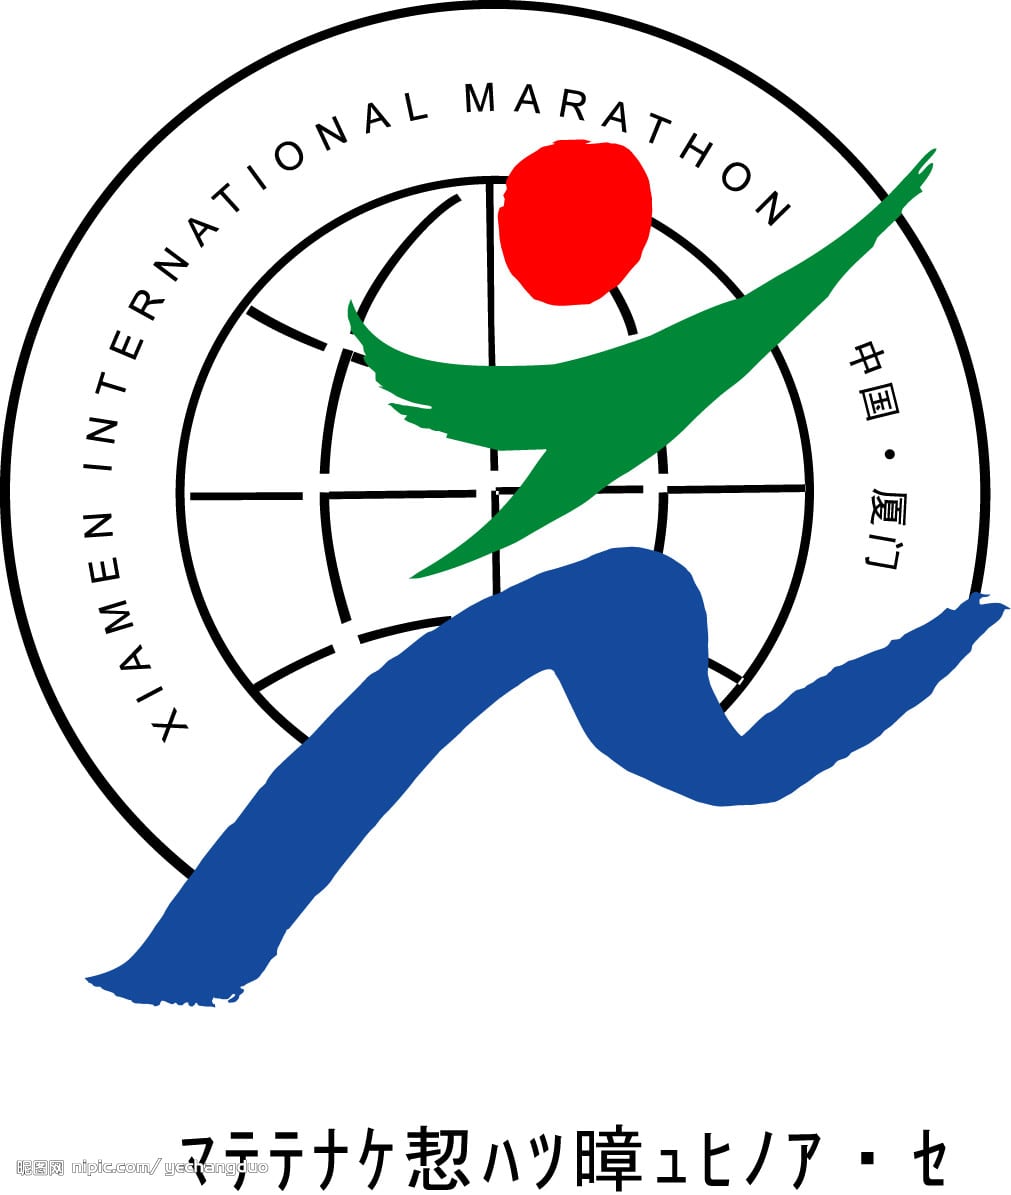 Xiamen International Marathon logo on RaceRaves